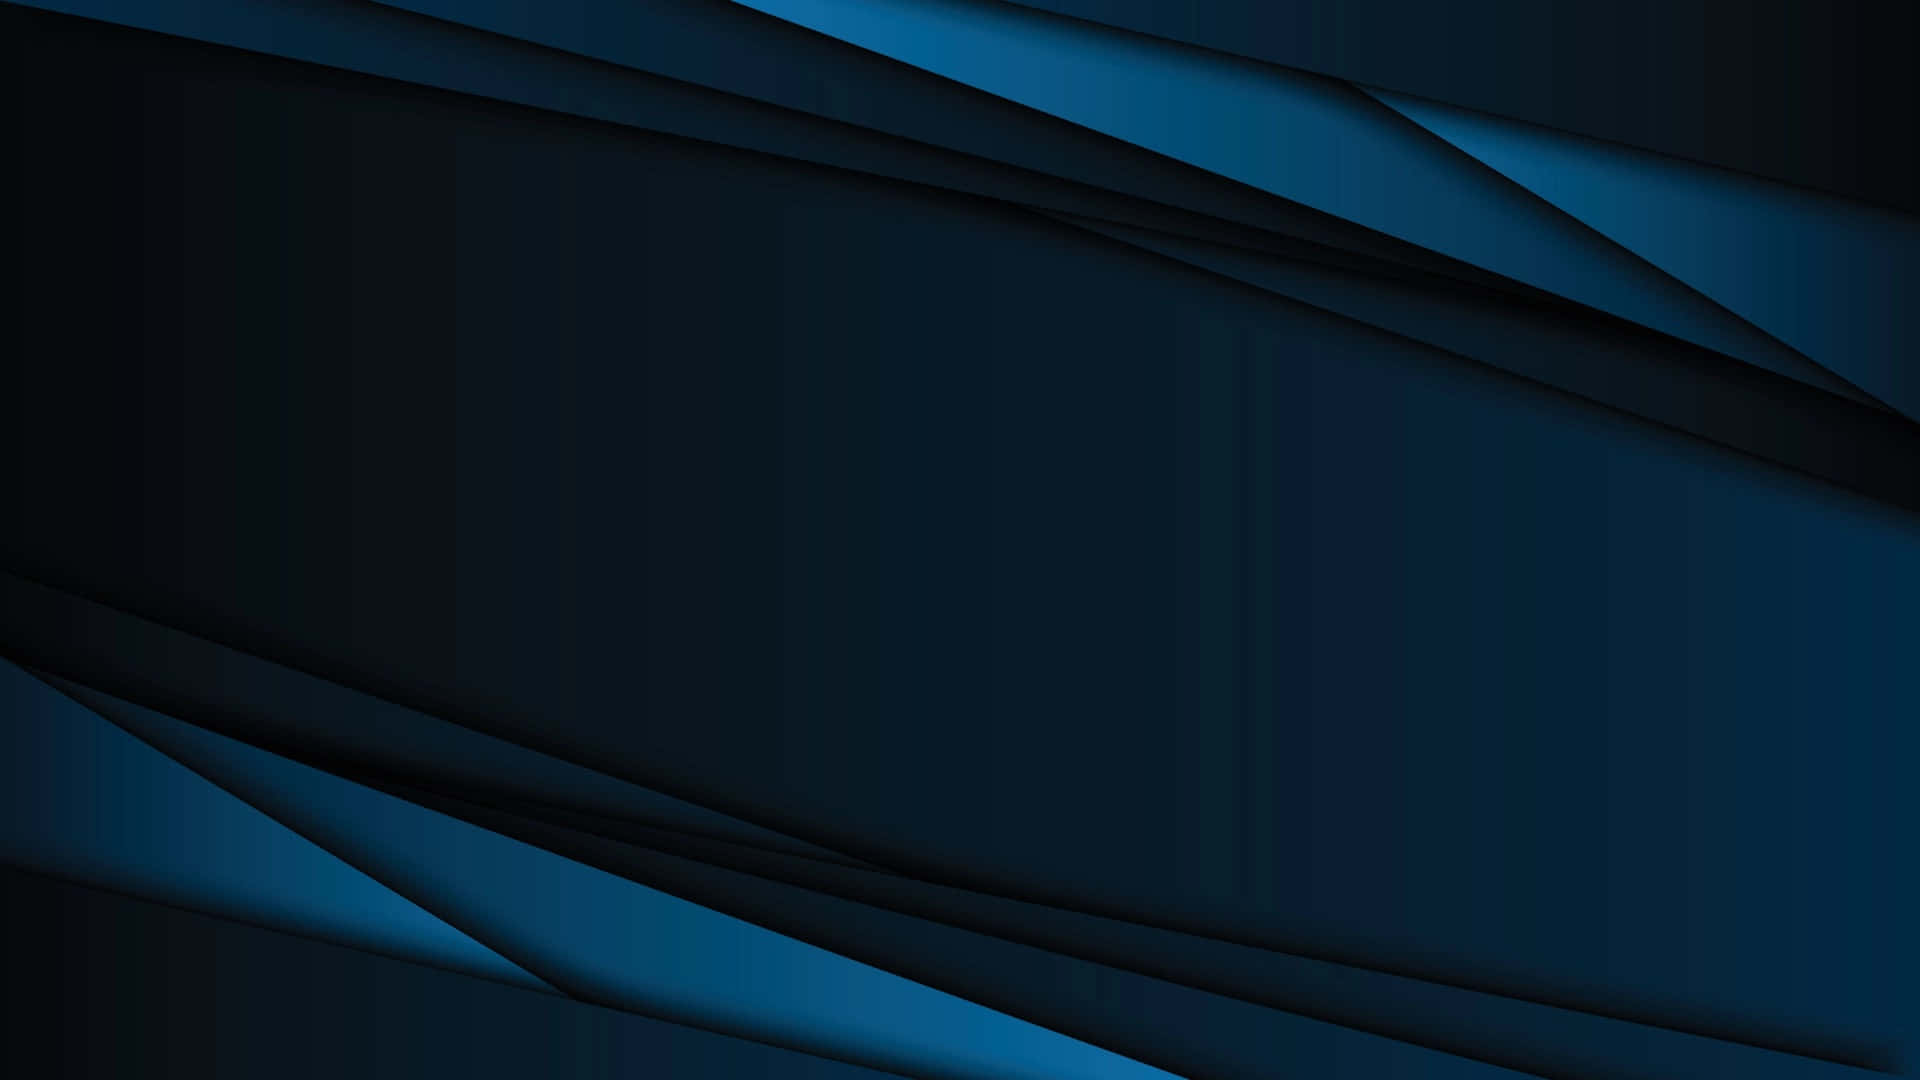 Download Dark Aesthetic Navy Blue Background | Wallpapers.com